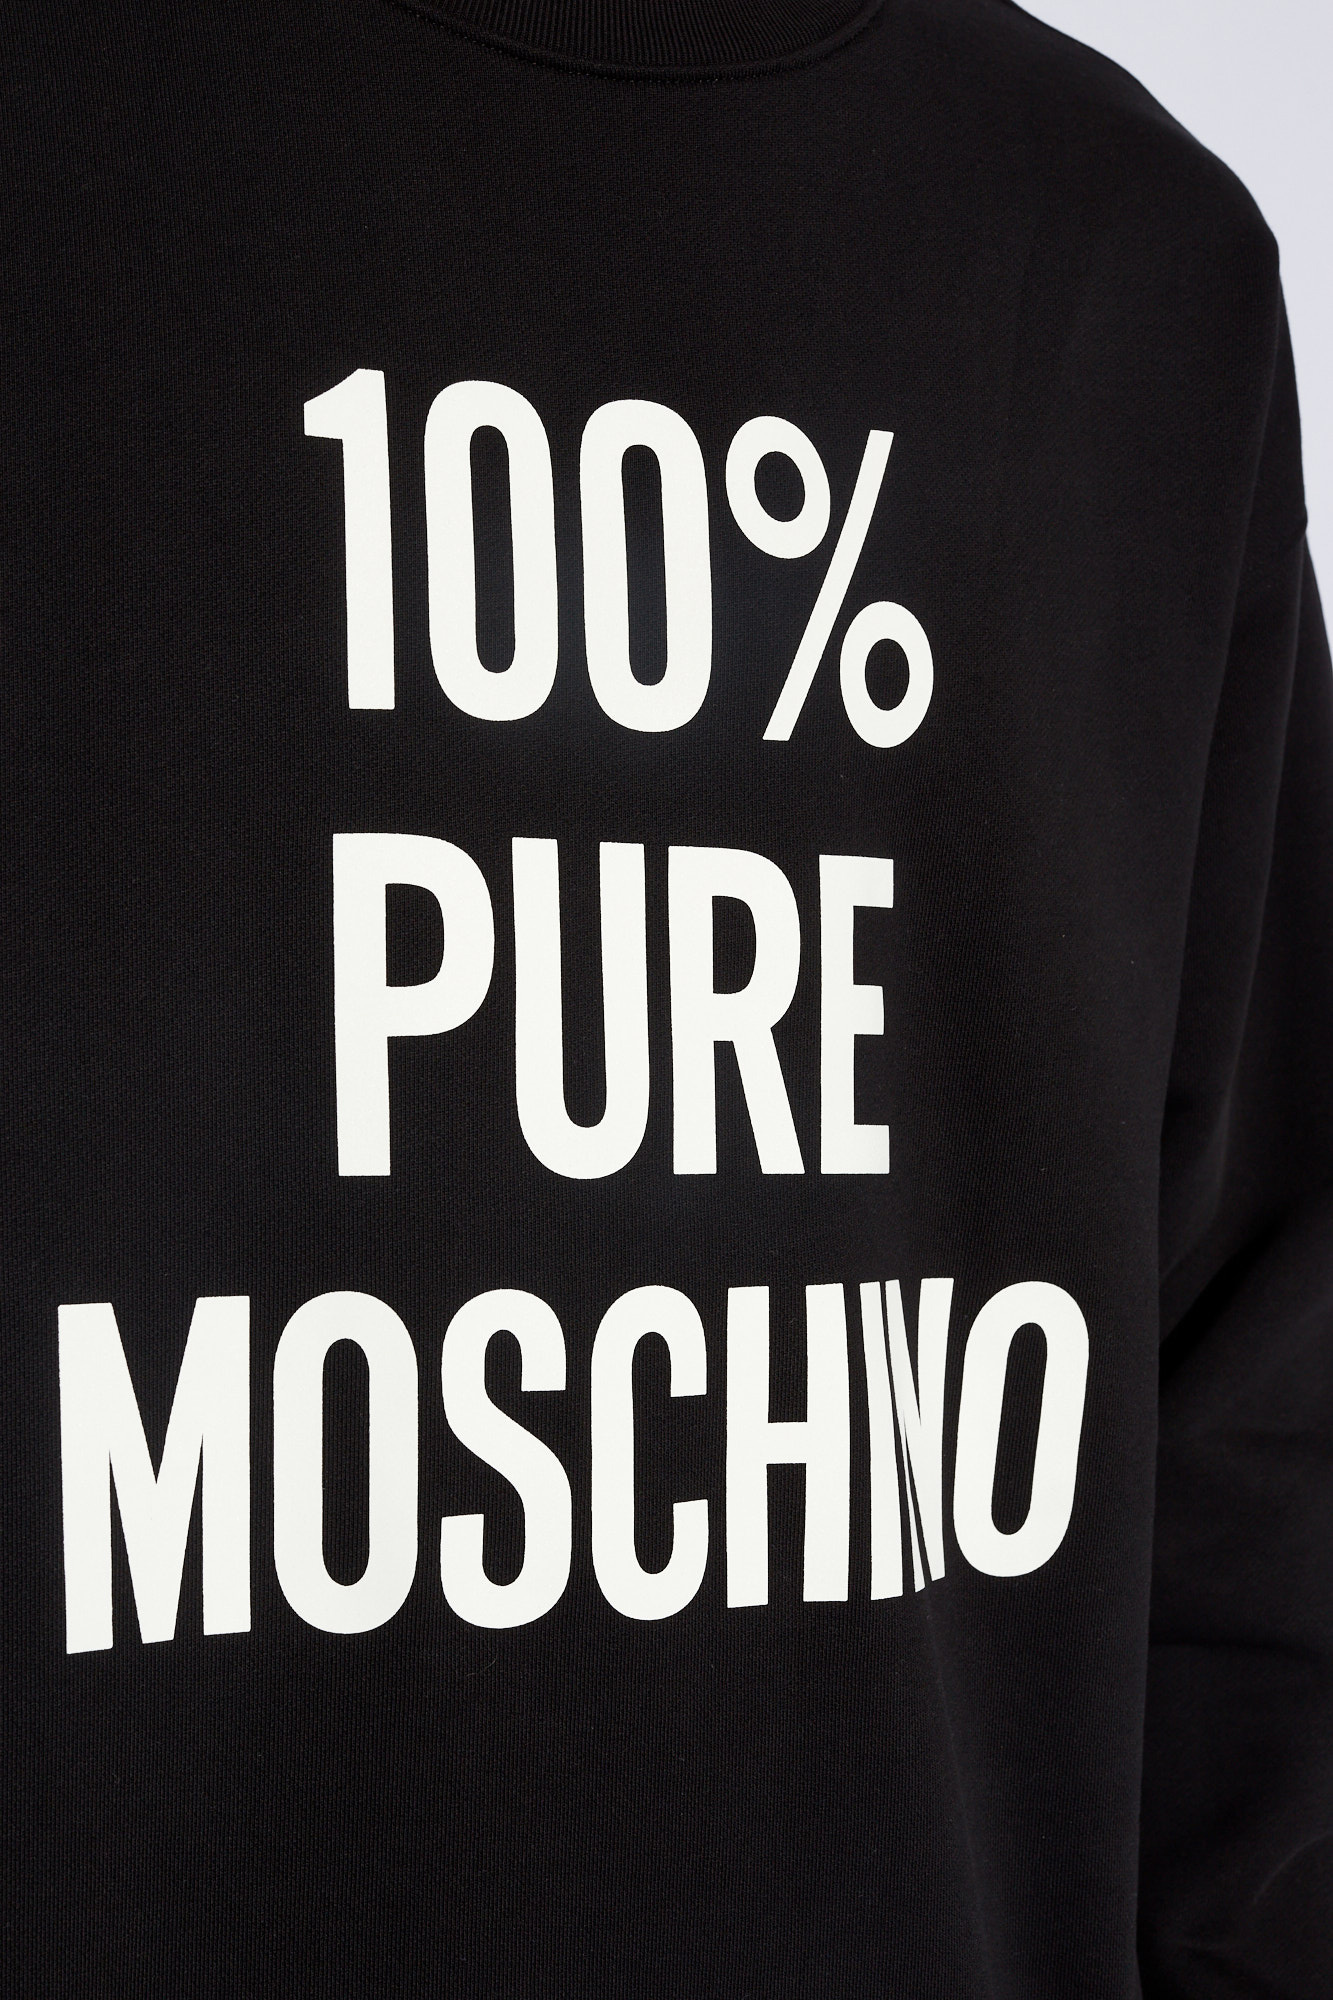 Black Sweatshirt with logo Moschino - Vitkac GB